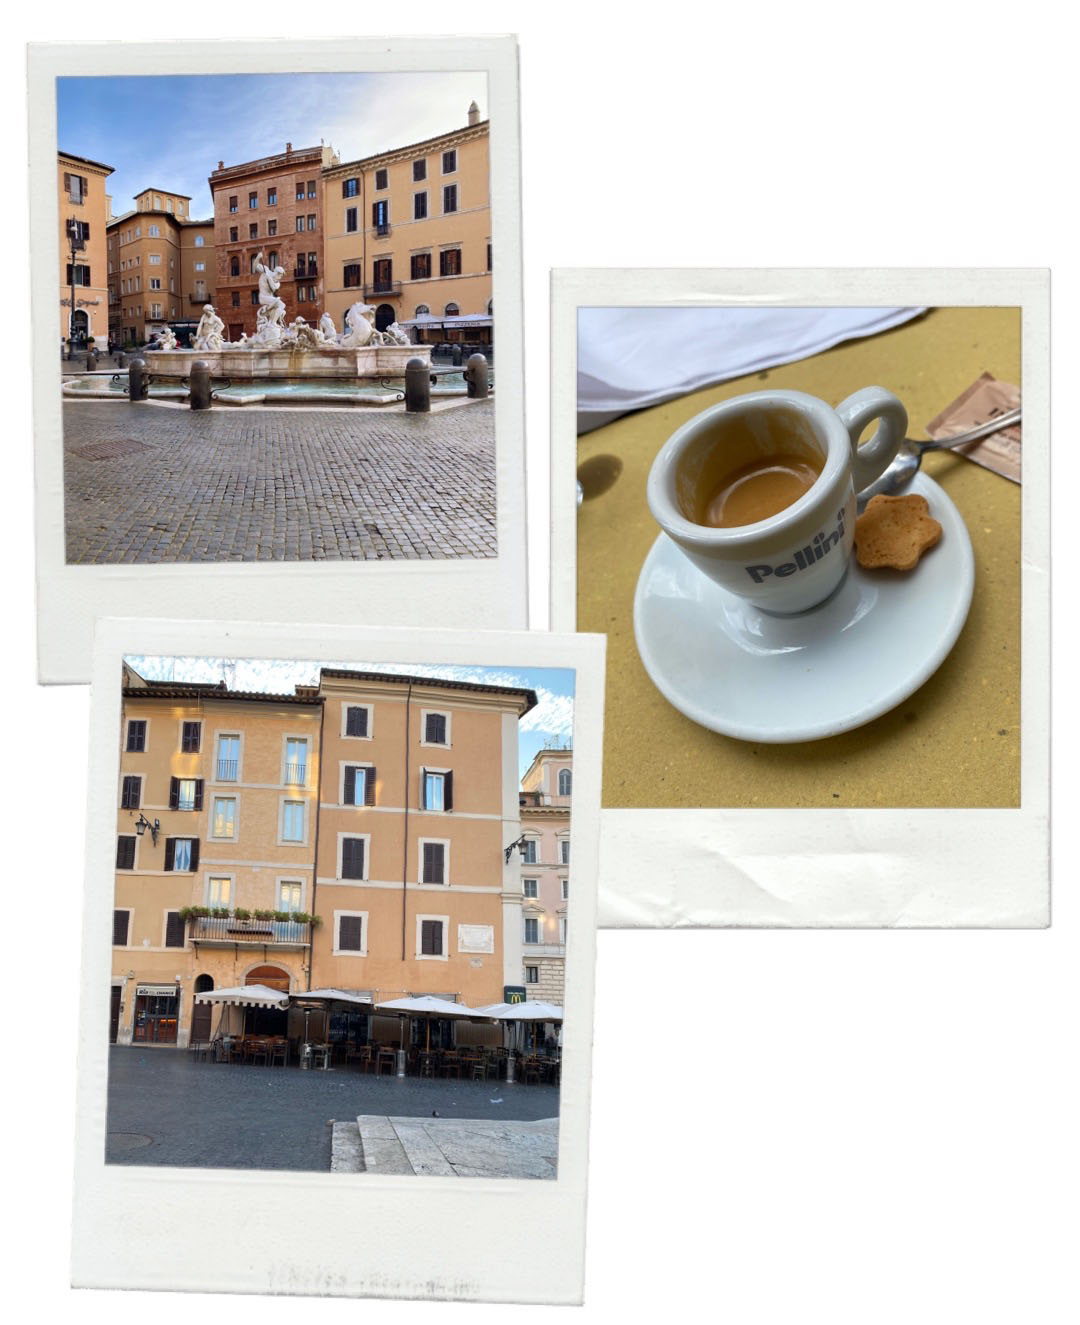 Coco & Vera - Piazza Navona, Pantheon and espresso in Rome